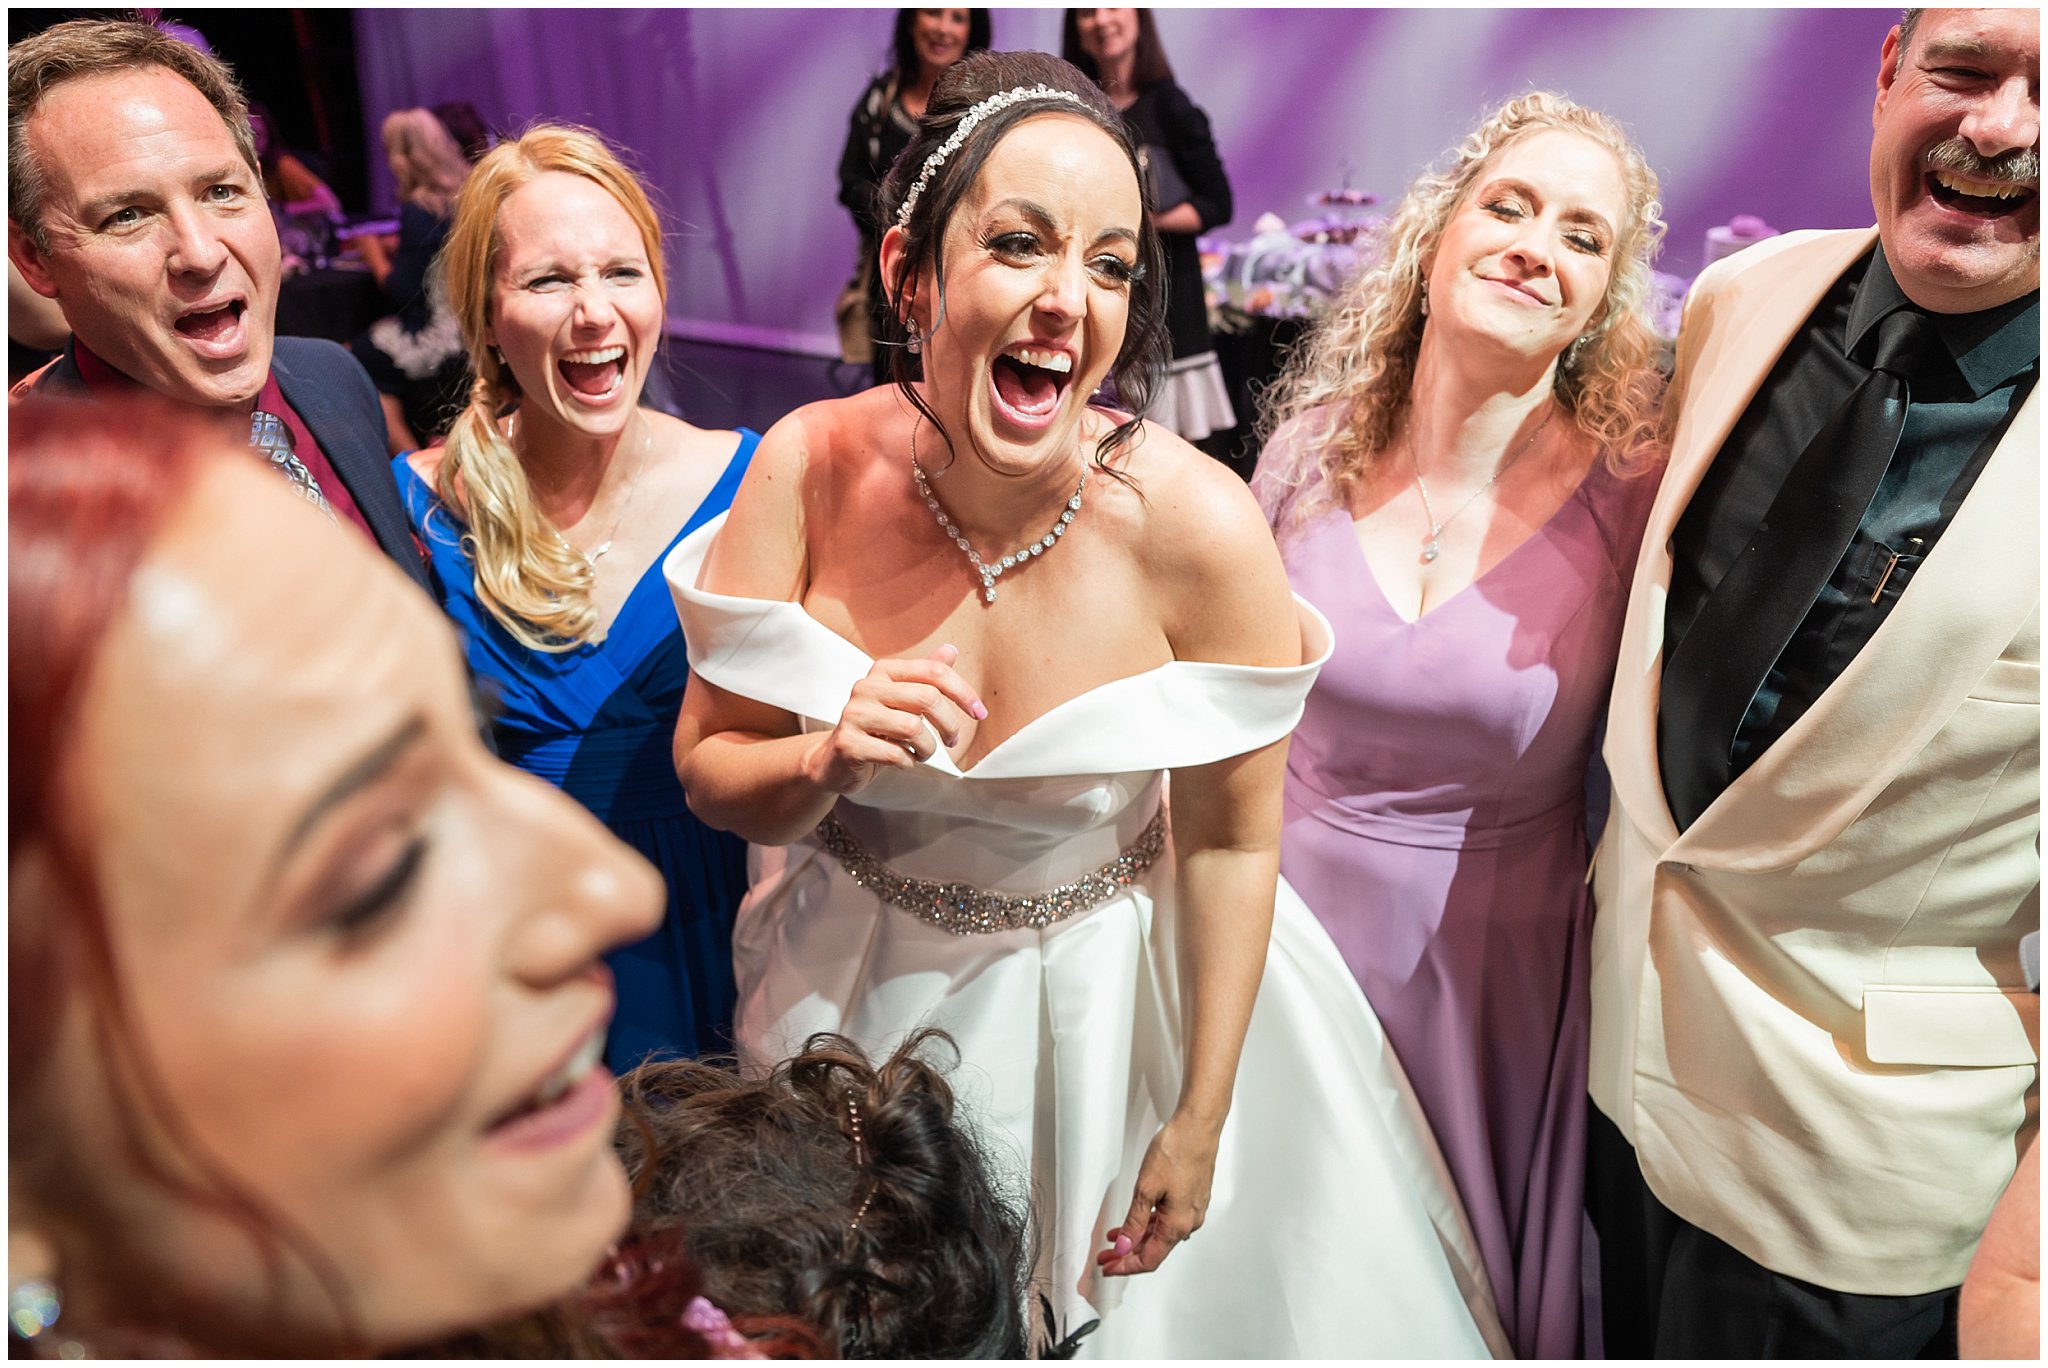 Wedding reception on stage | Broadway Musical Theatre Wedding